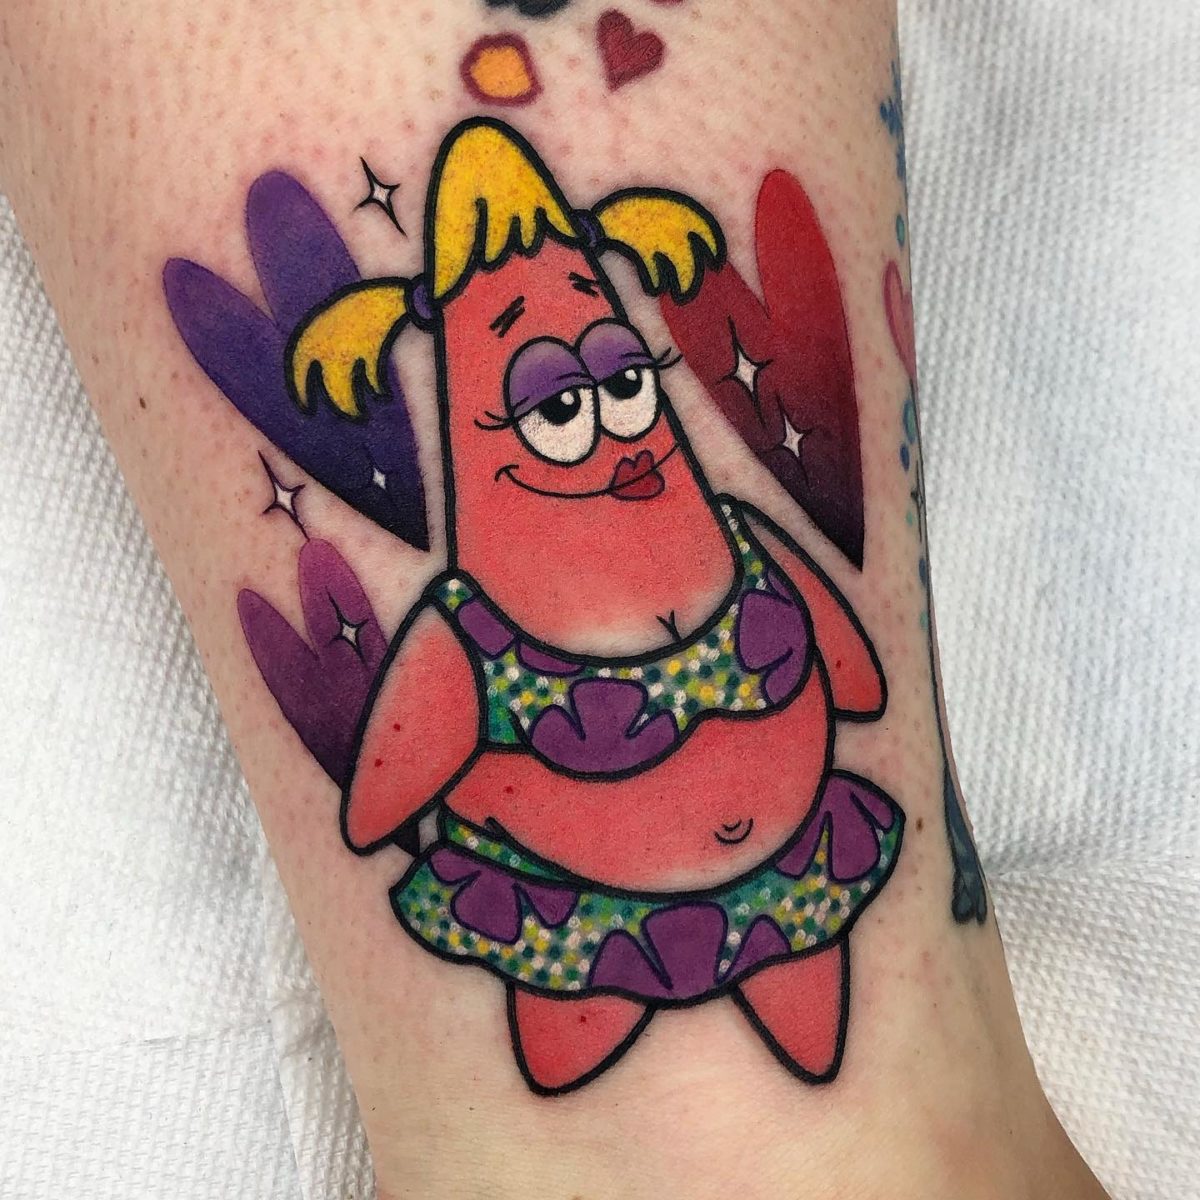 SpongeBob tattoos